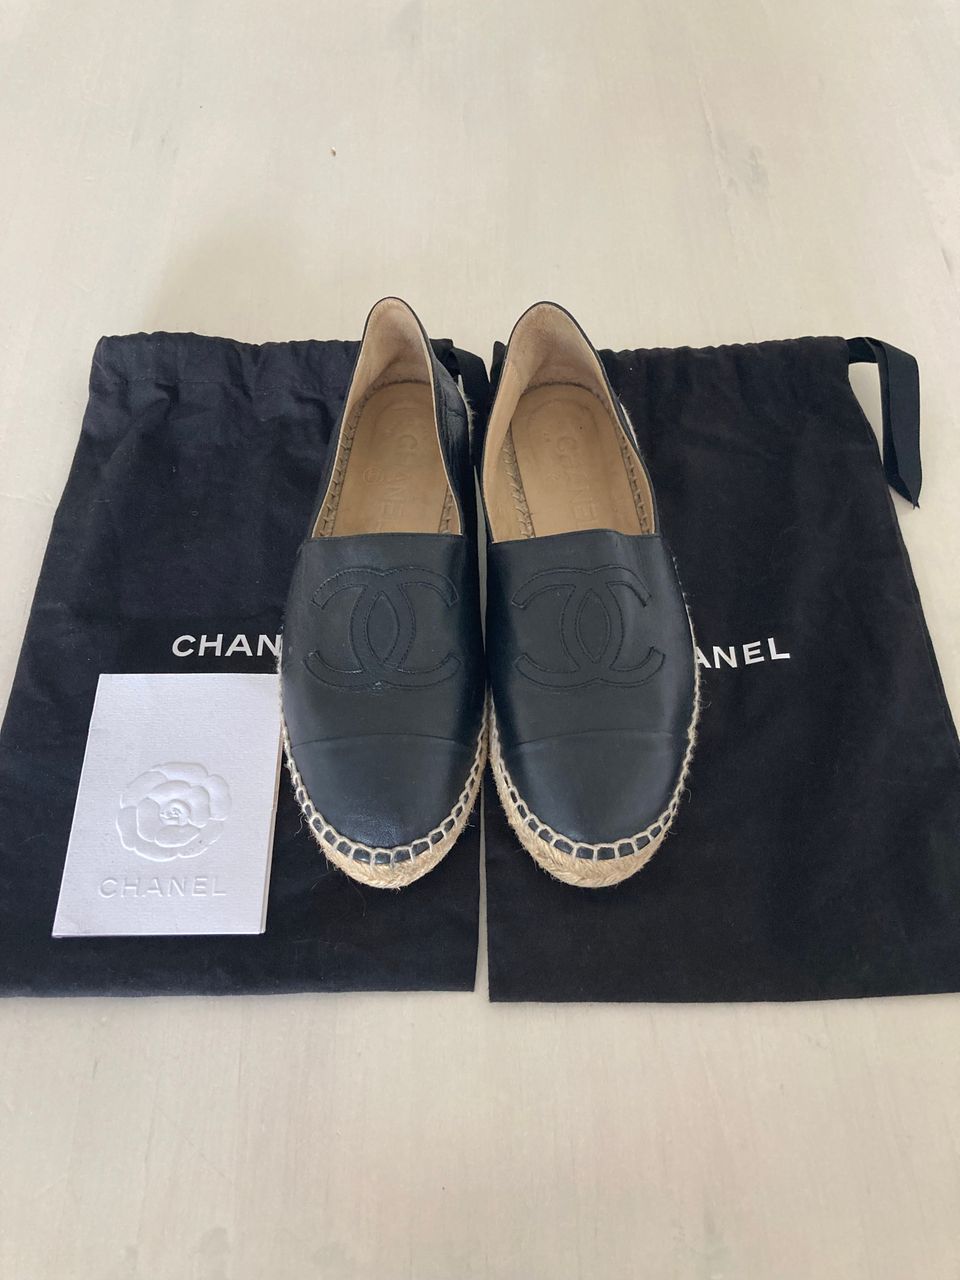 Chanel Espadrilles 37